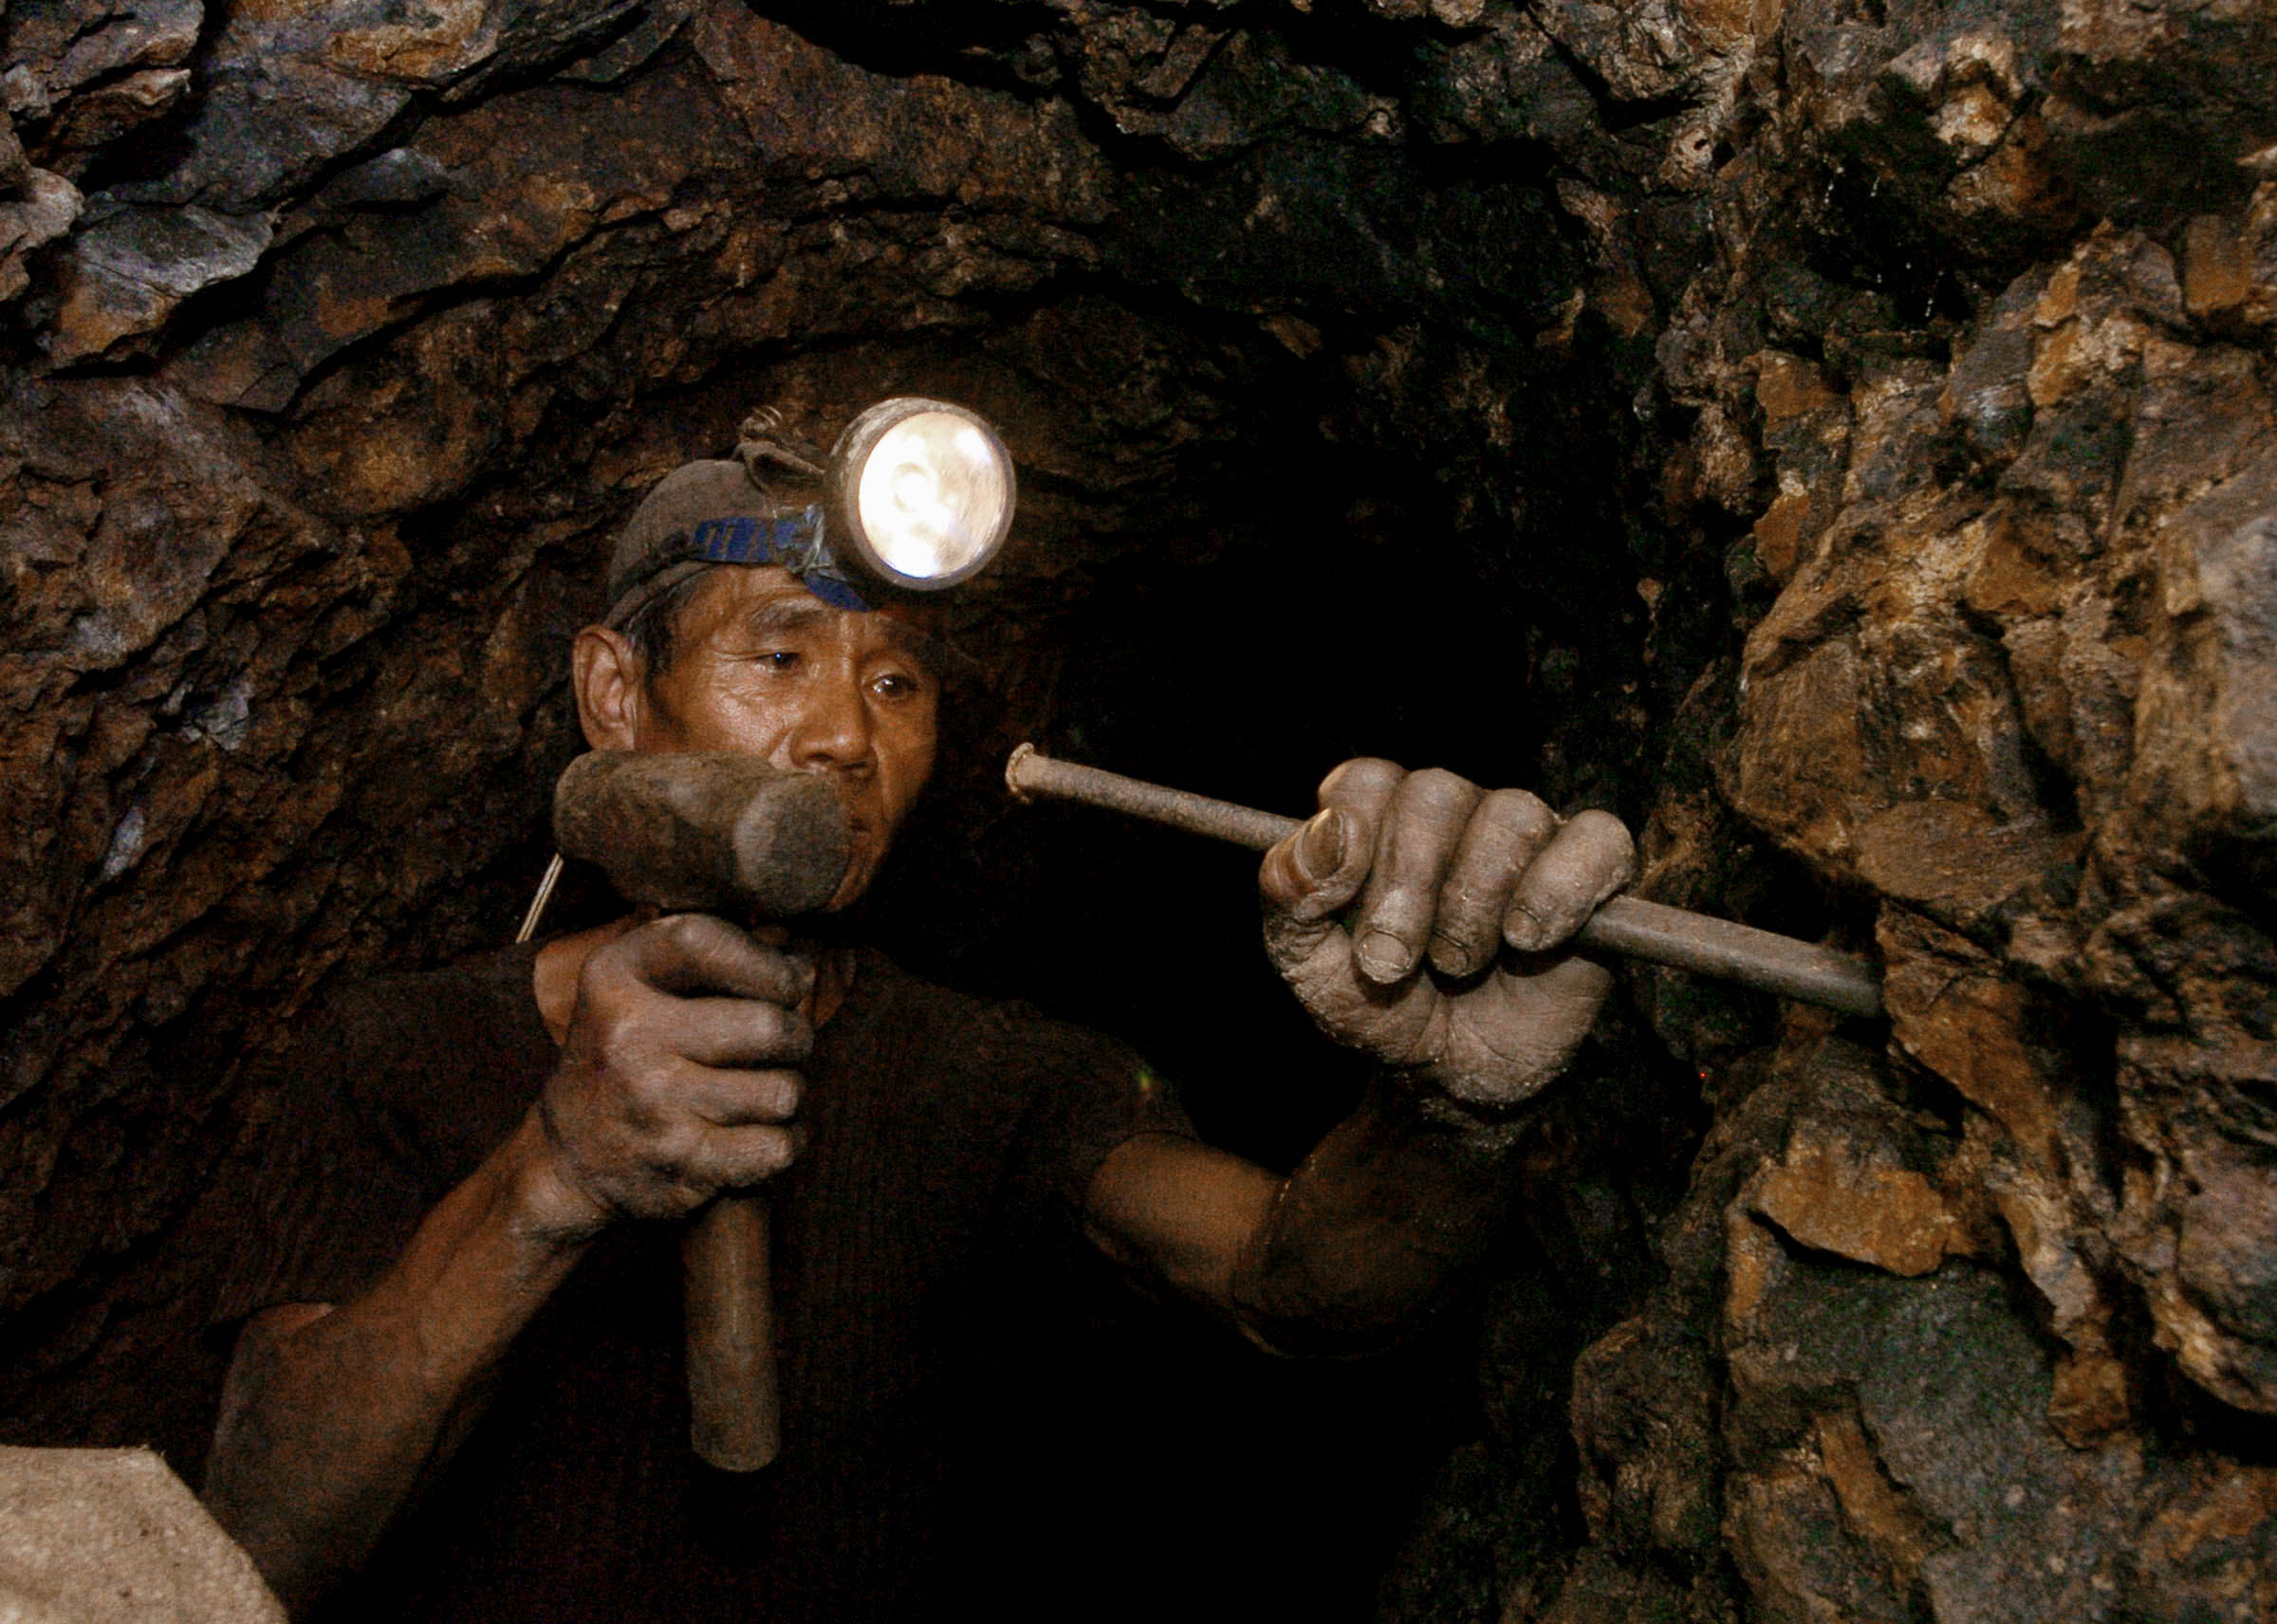 WV mining industry yet to unlock full potential